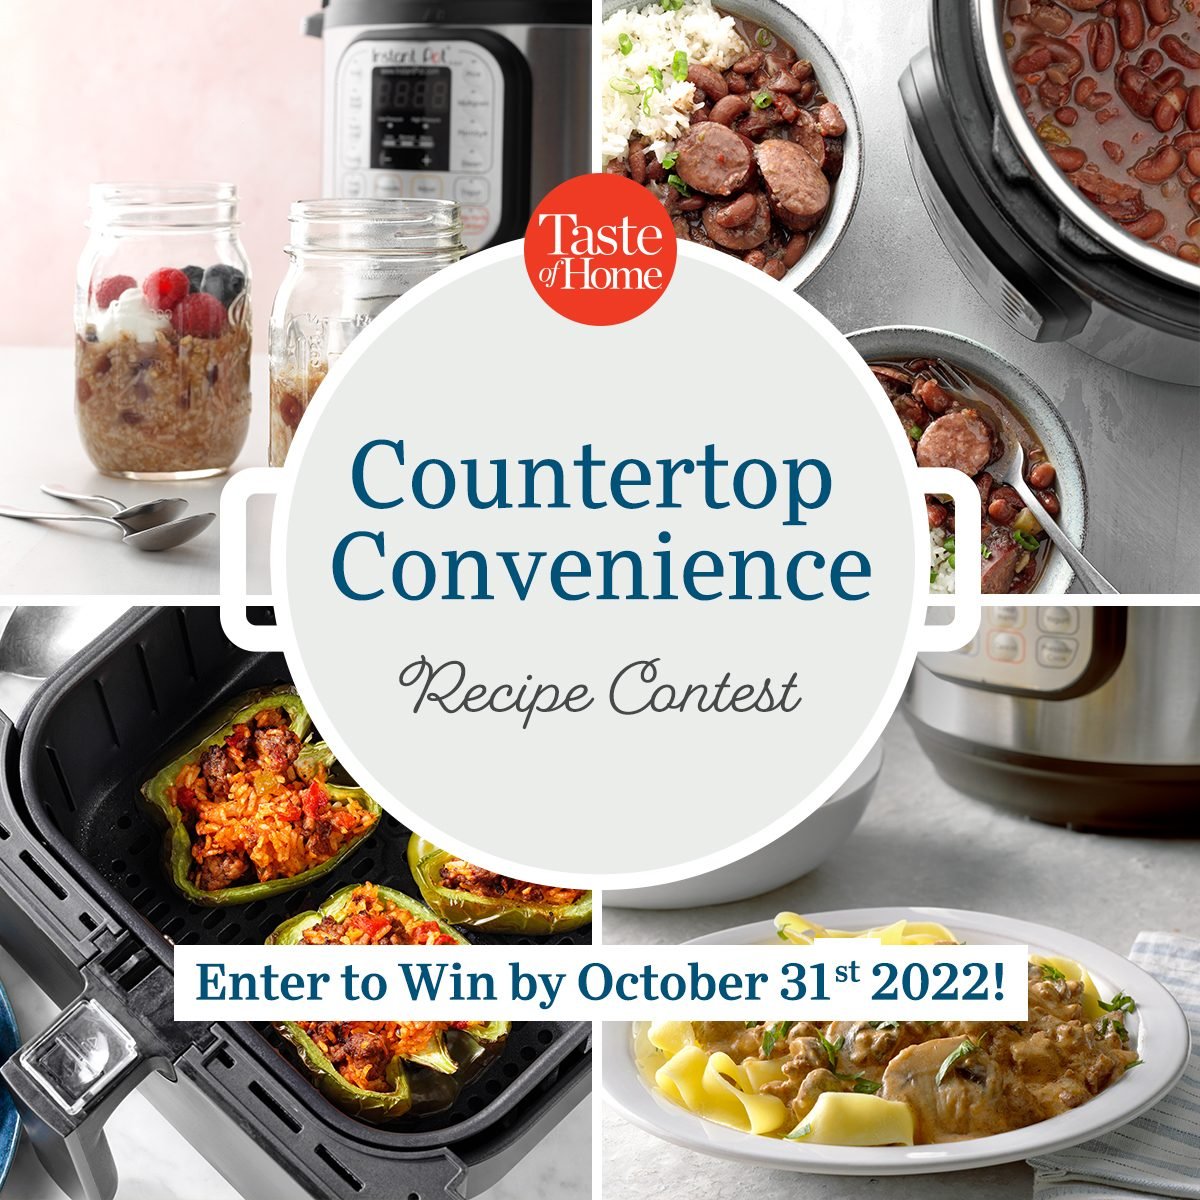 Countertop Convenience Recipe Contest from Taste of Home Magazine